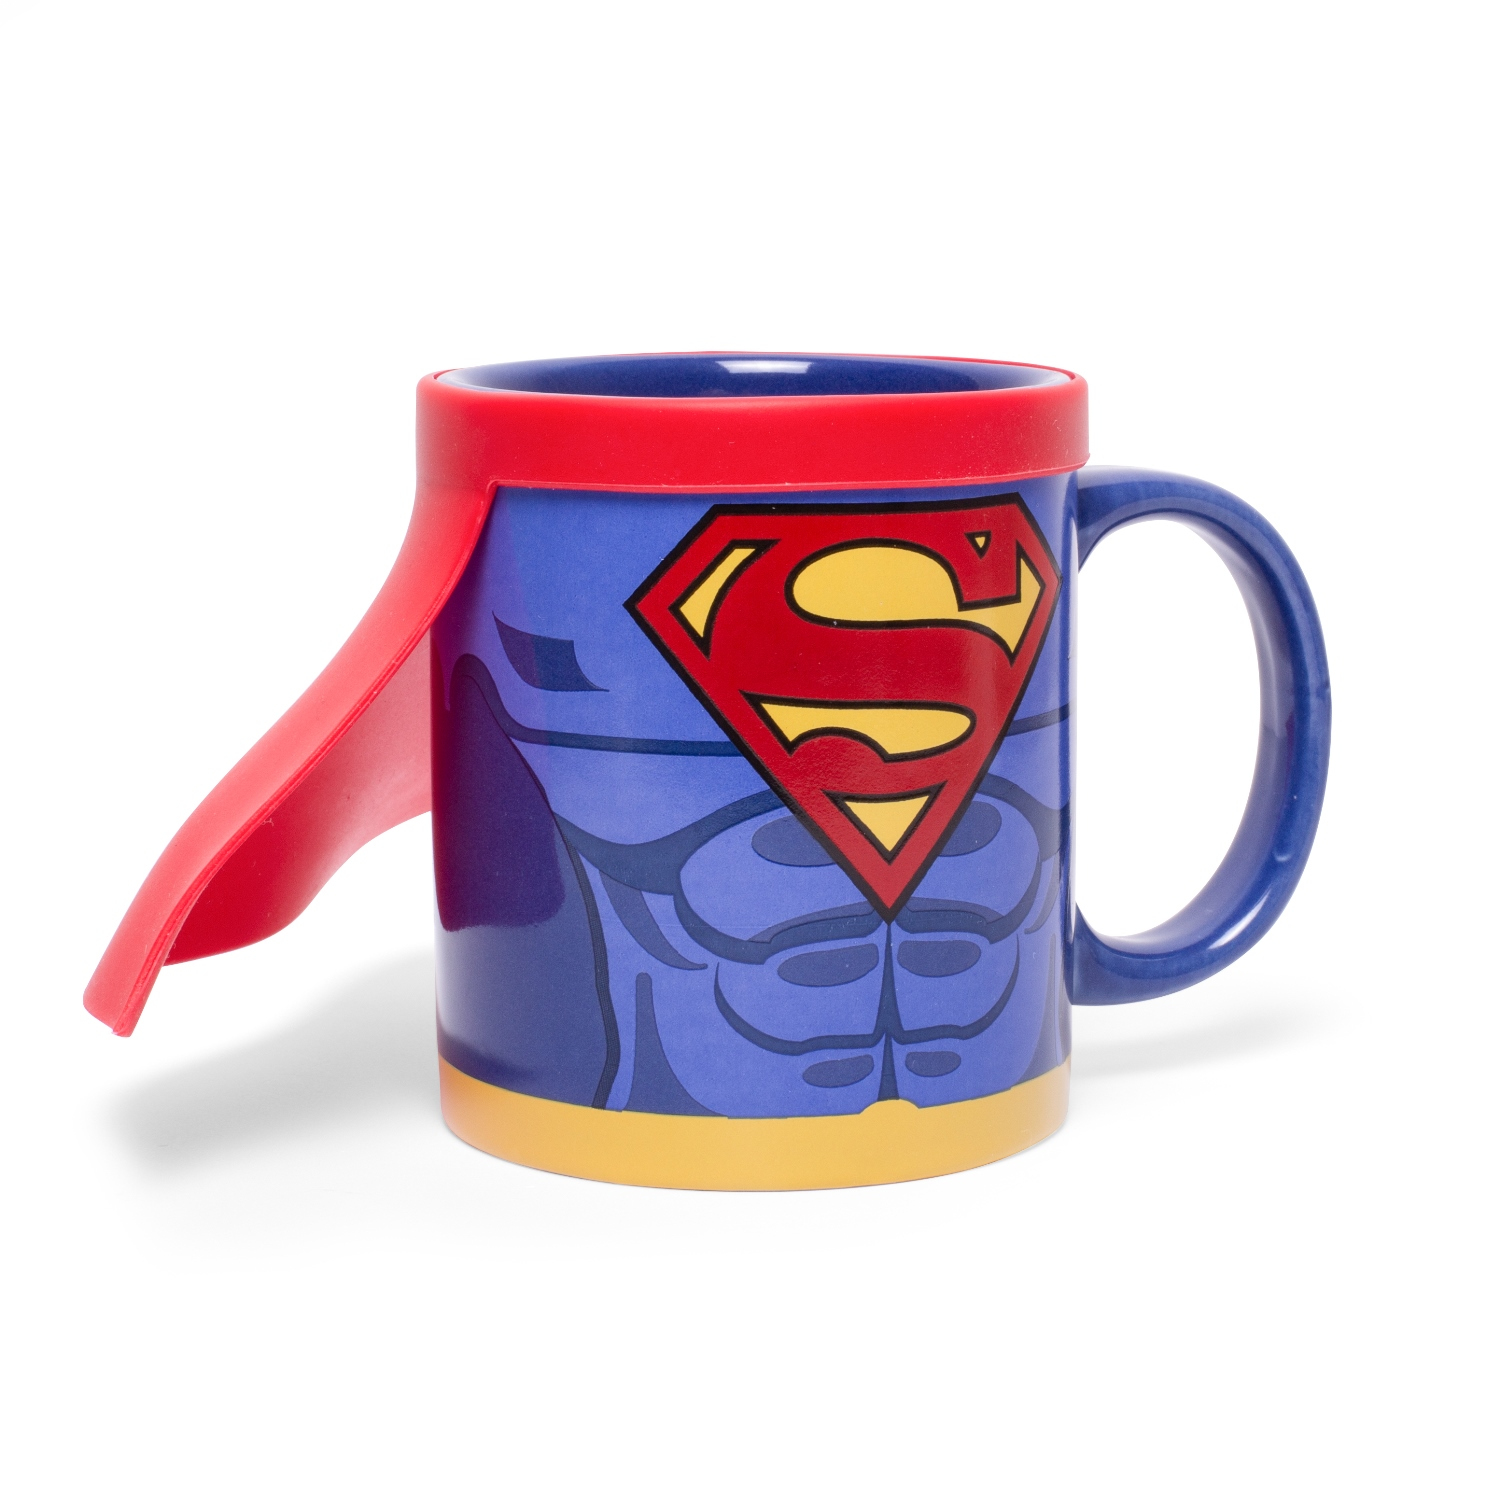 Thumbs Up Superman Mug with Cape - Eins/Eine(r) - 0,25 l - Blau - Rot - Keramik - Silikon - Universal - 1 Stück(e)